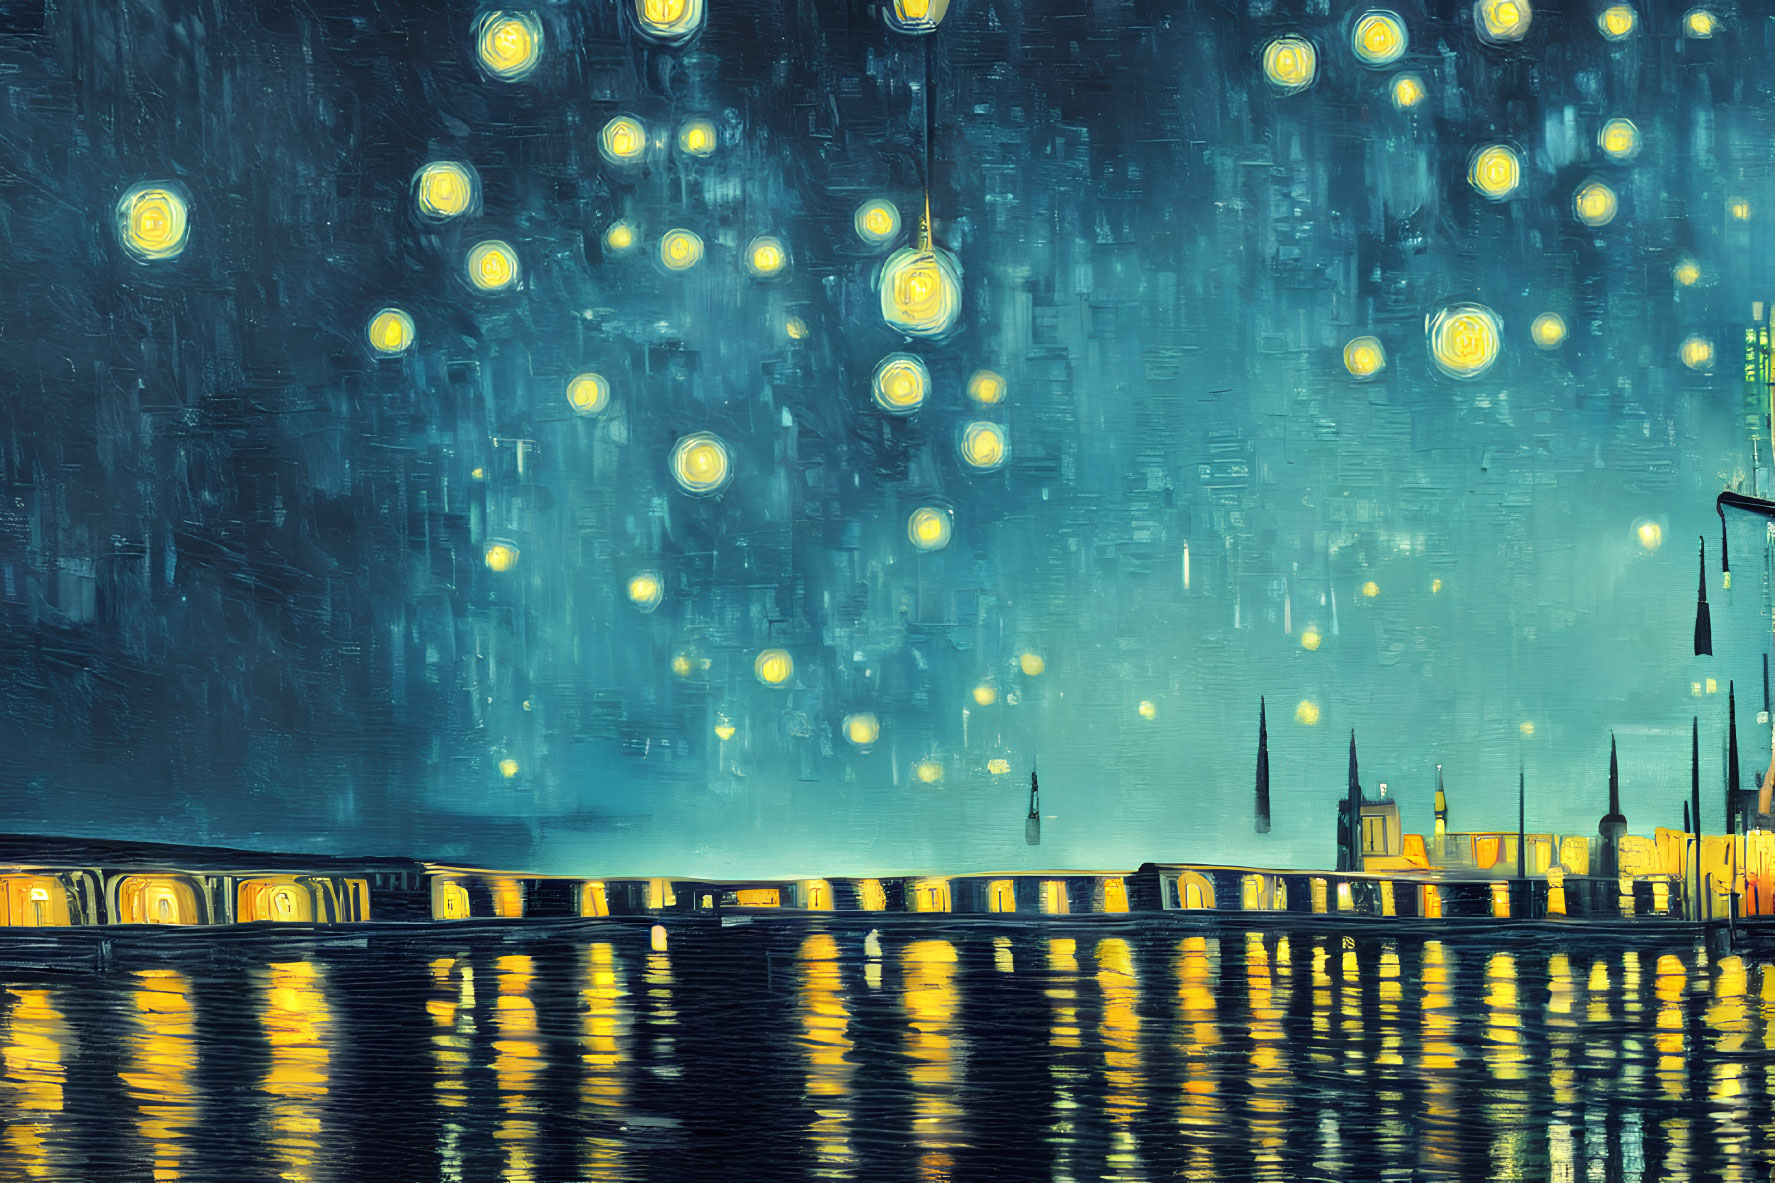 Nightscape with starry illumination and bridge reflection